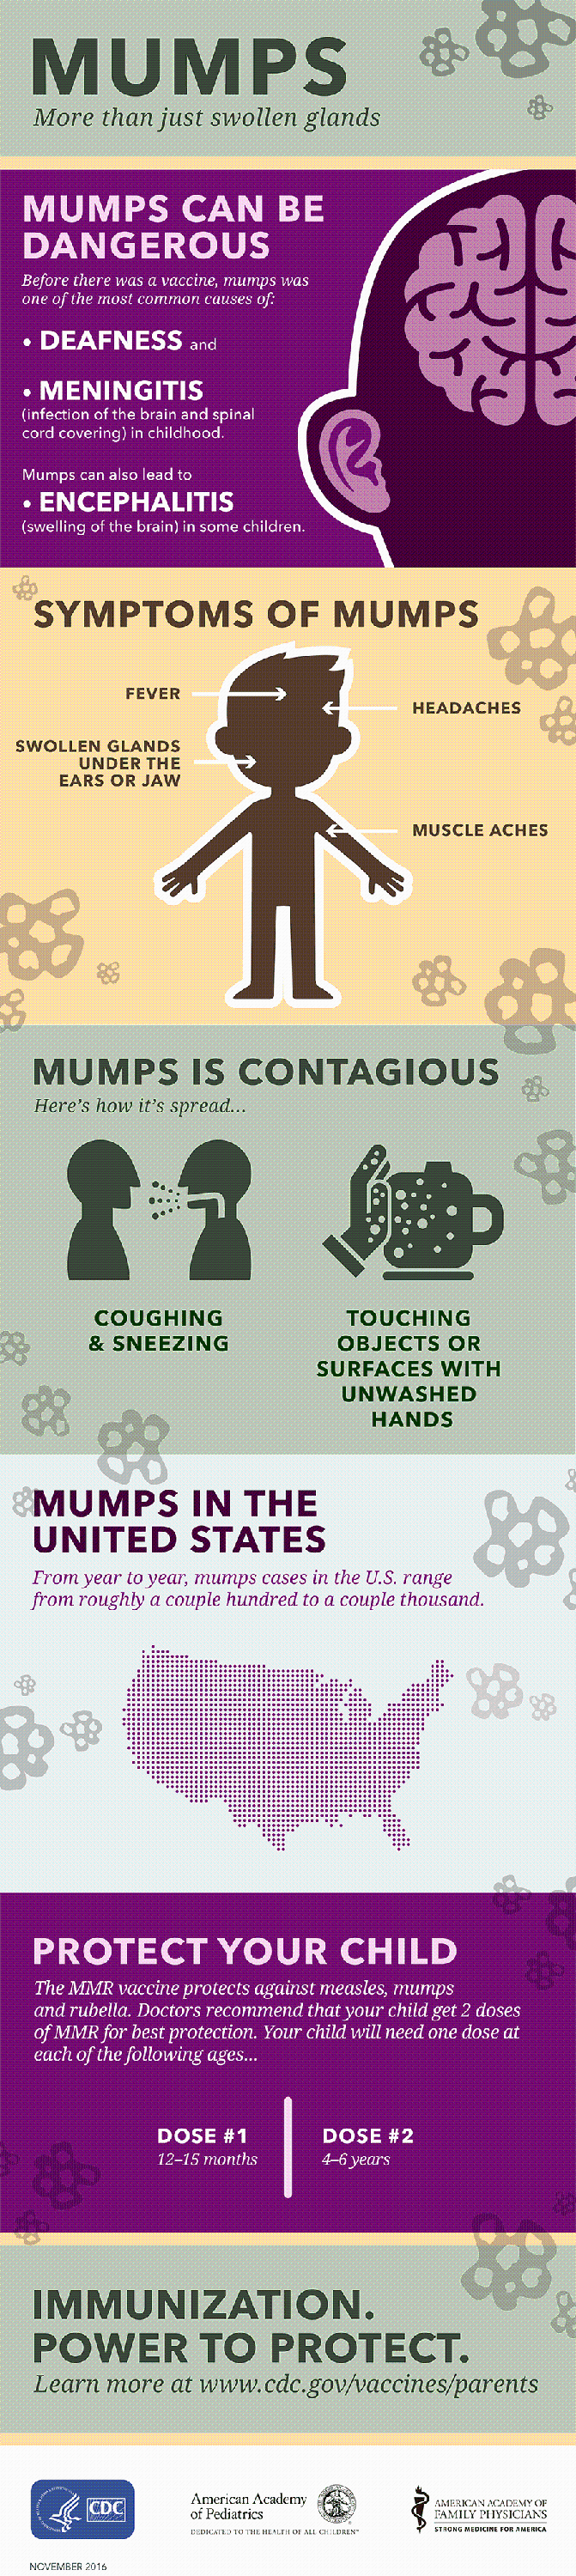 mumps-infographic